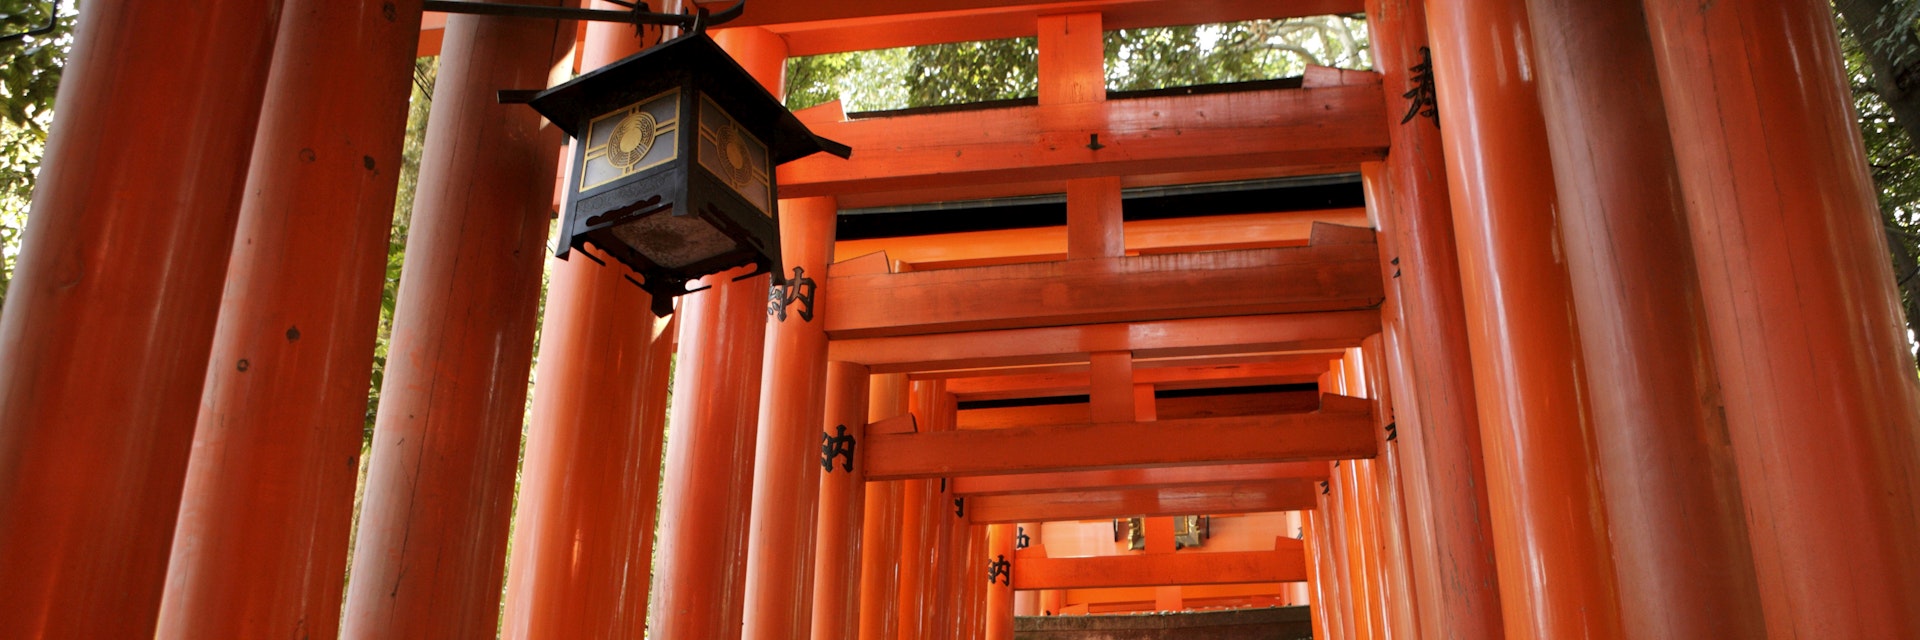 Red torii (shrine gates) at Fushimi-Inari Taisha shrine.